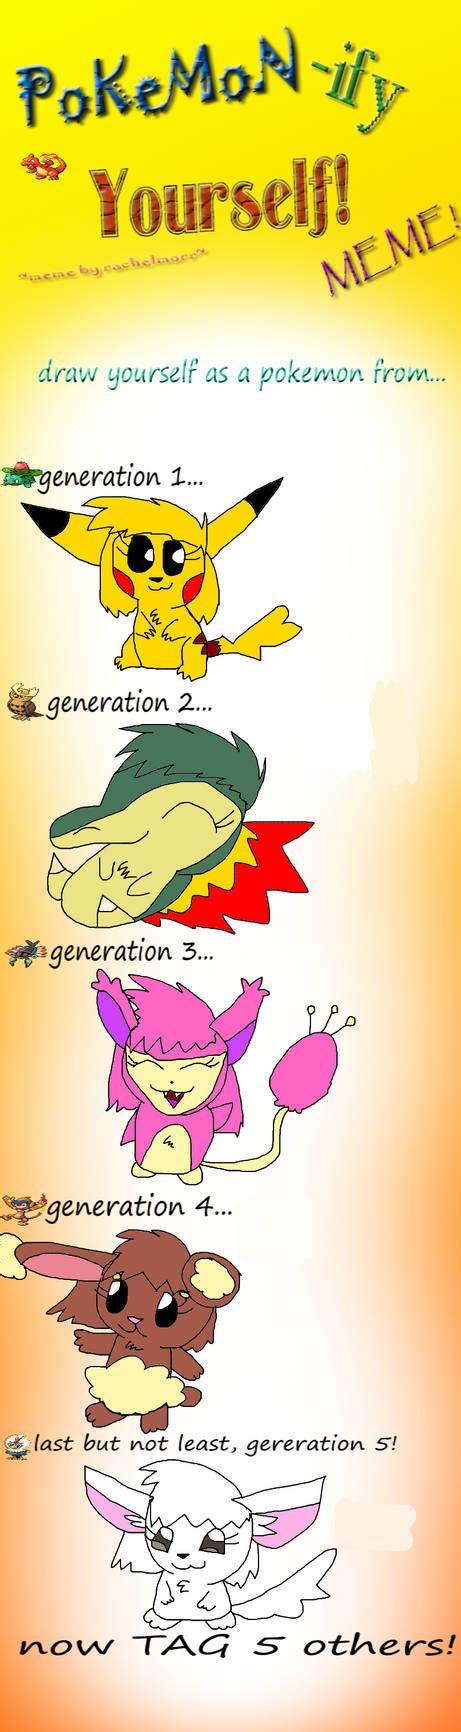 Pokemon Ify Yourself Meme By Skunkyrainbow270 On Deviantart